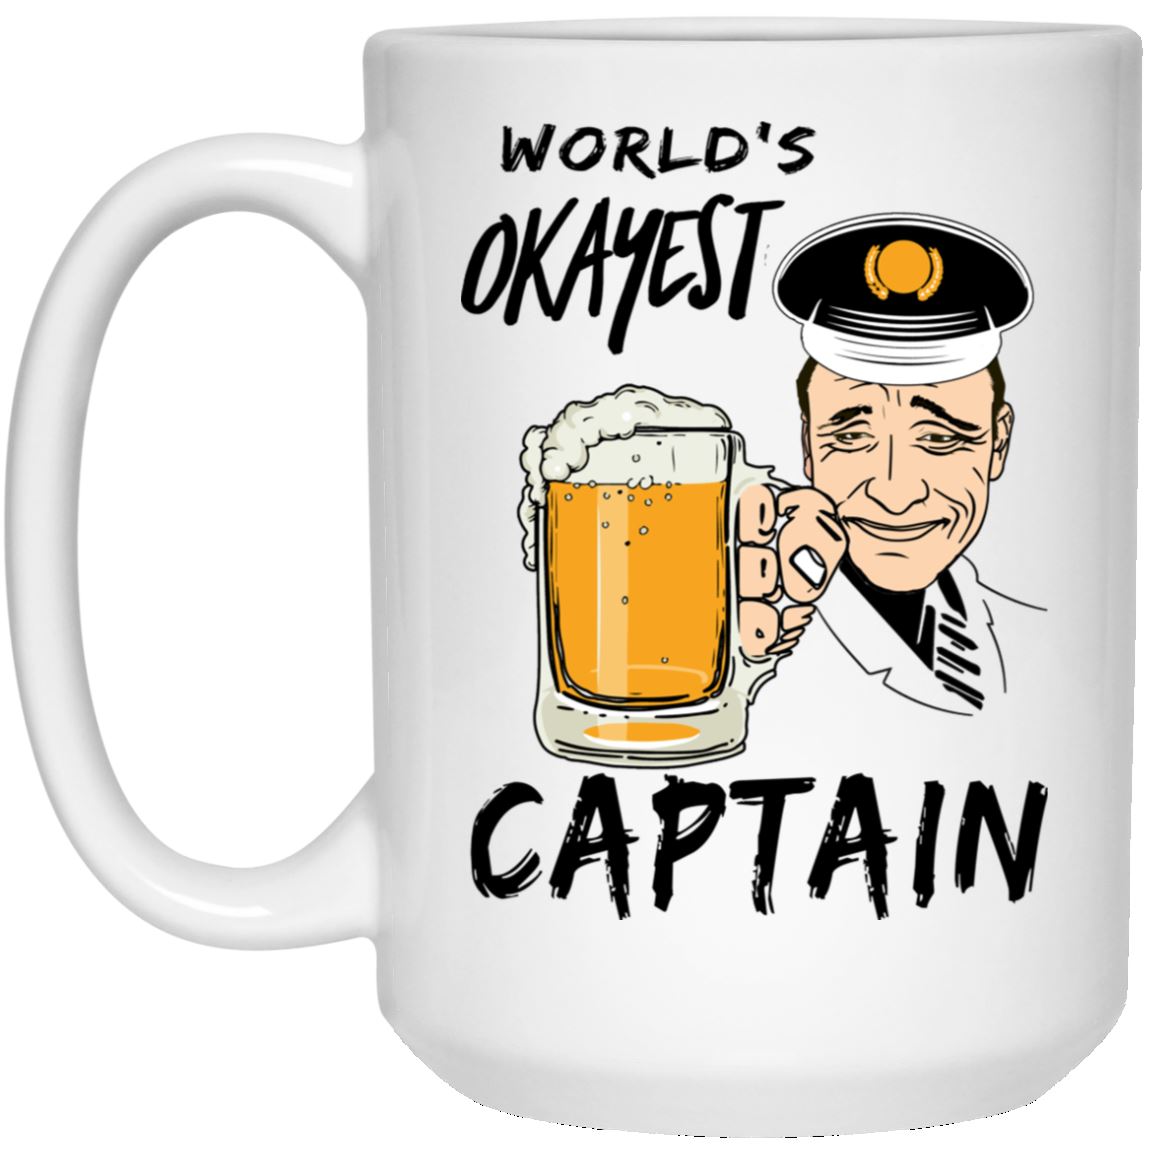 World's Okayest Captain - Jesse - Houseboat Kings